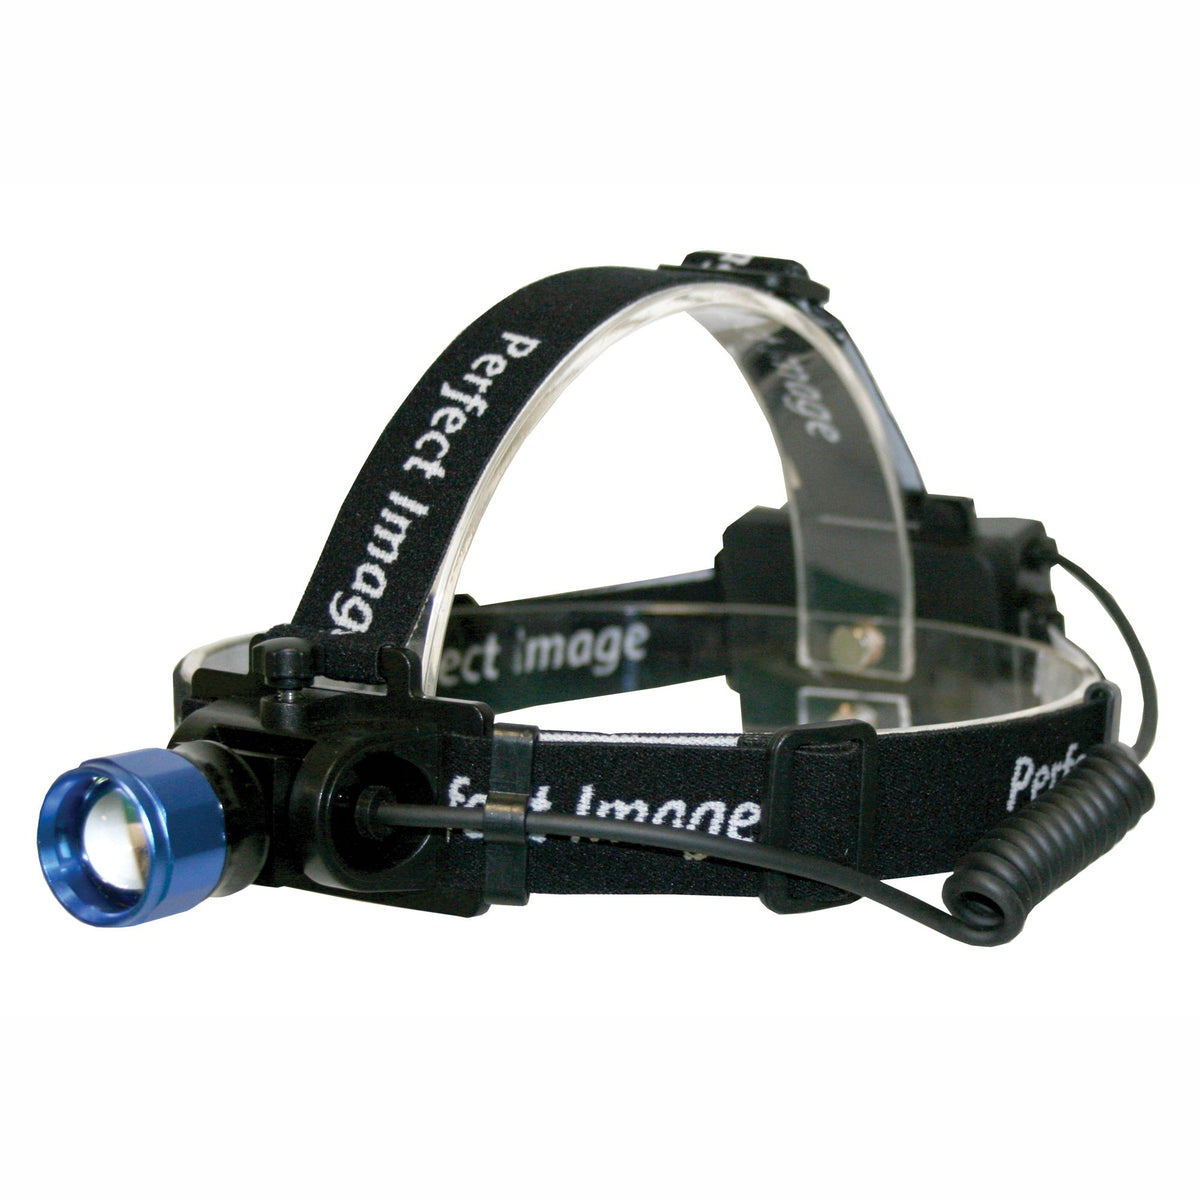 Perfect Image Zoom Headlamp 580 Lumens